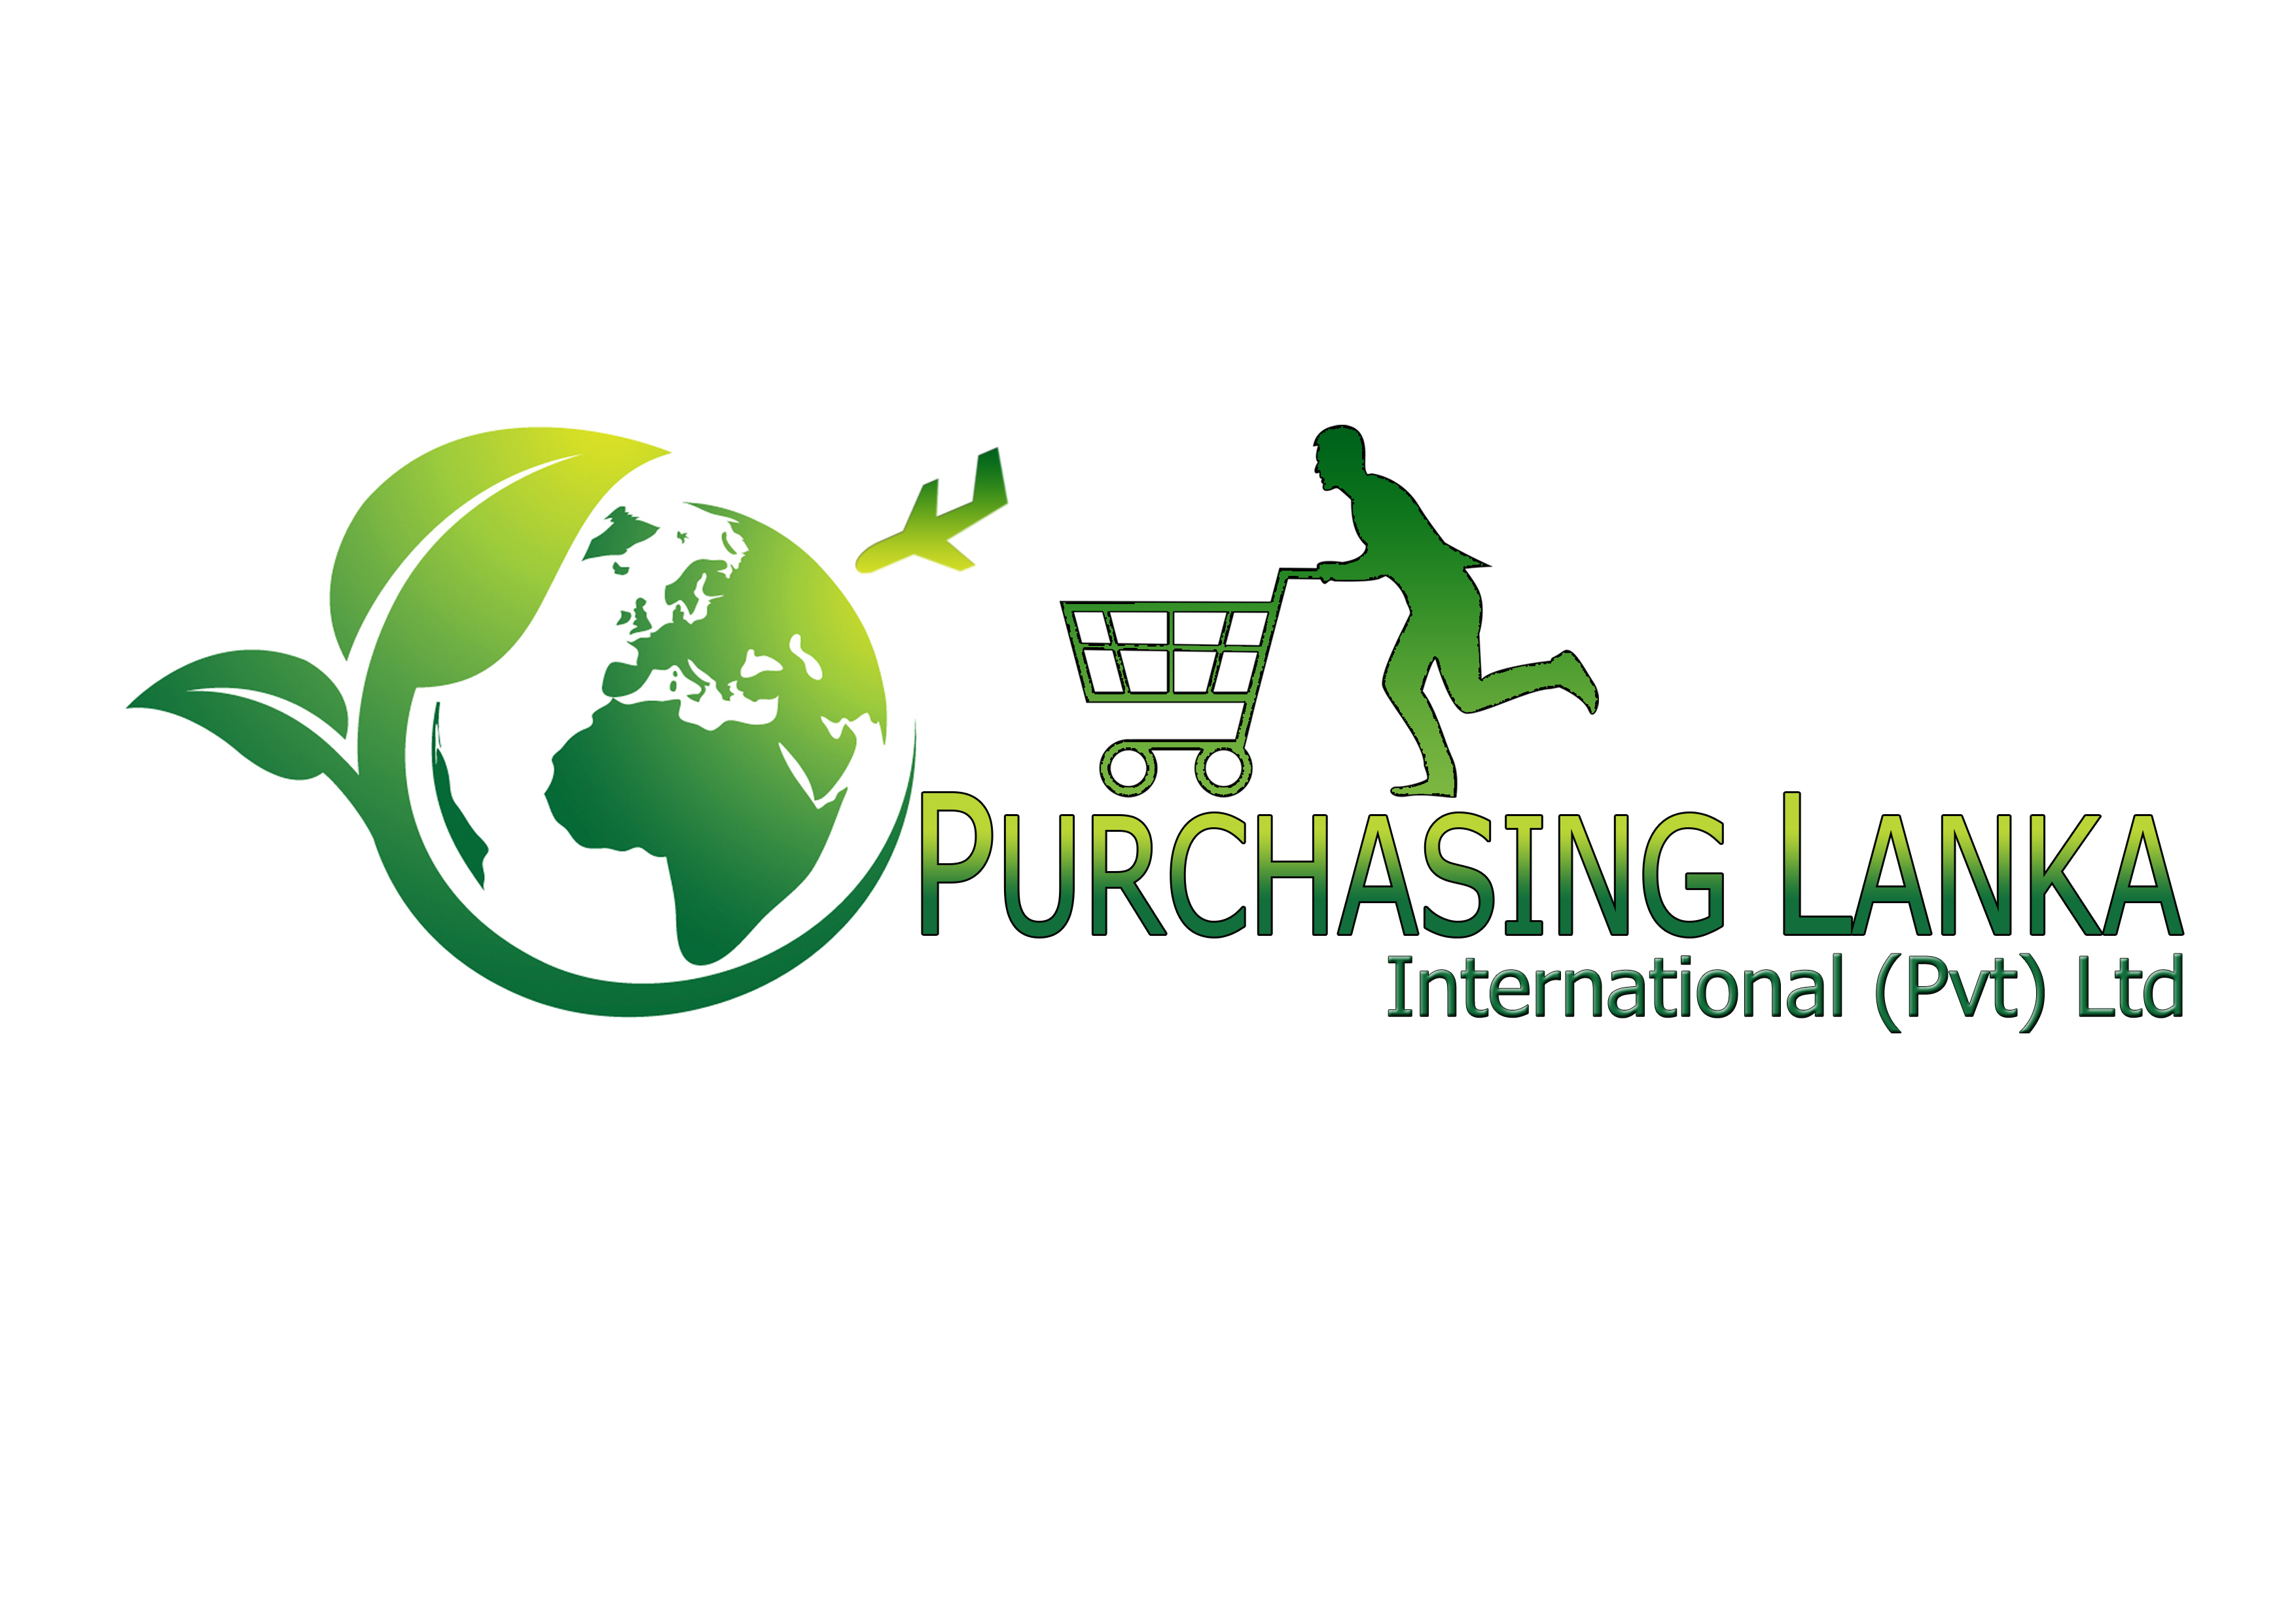 Purchasing Lanka International (Pvt) Ltd